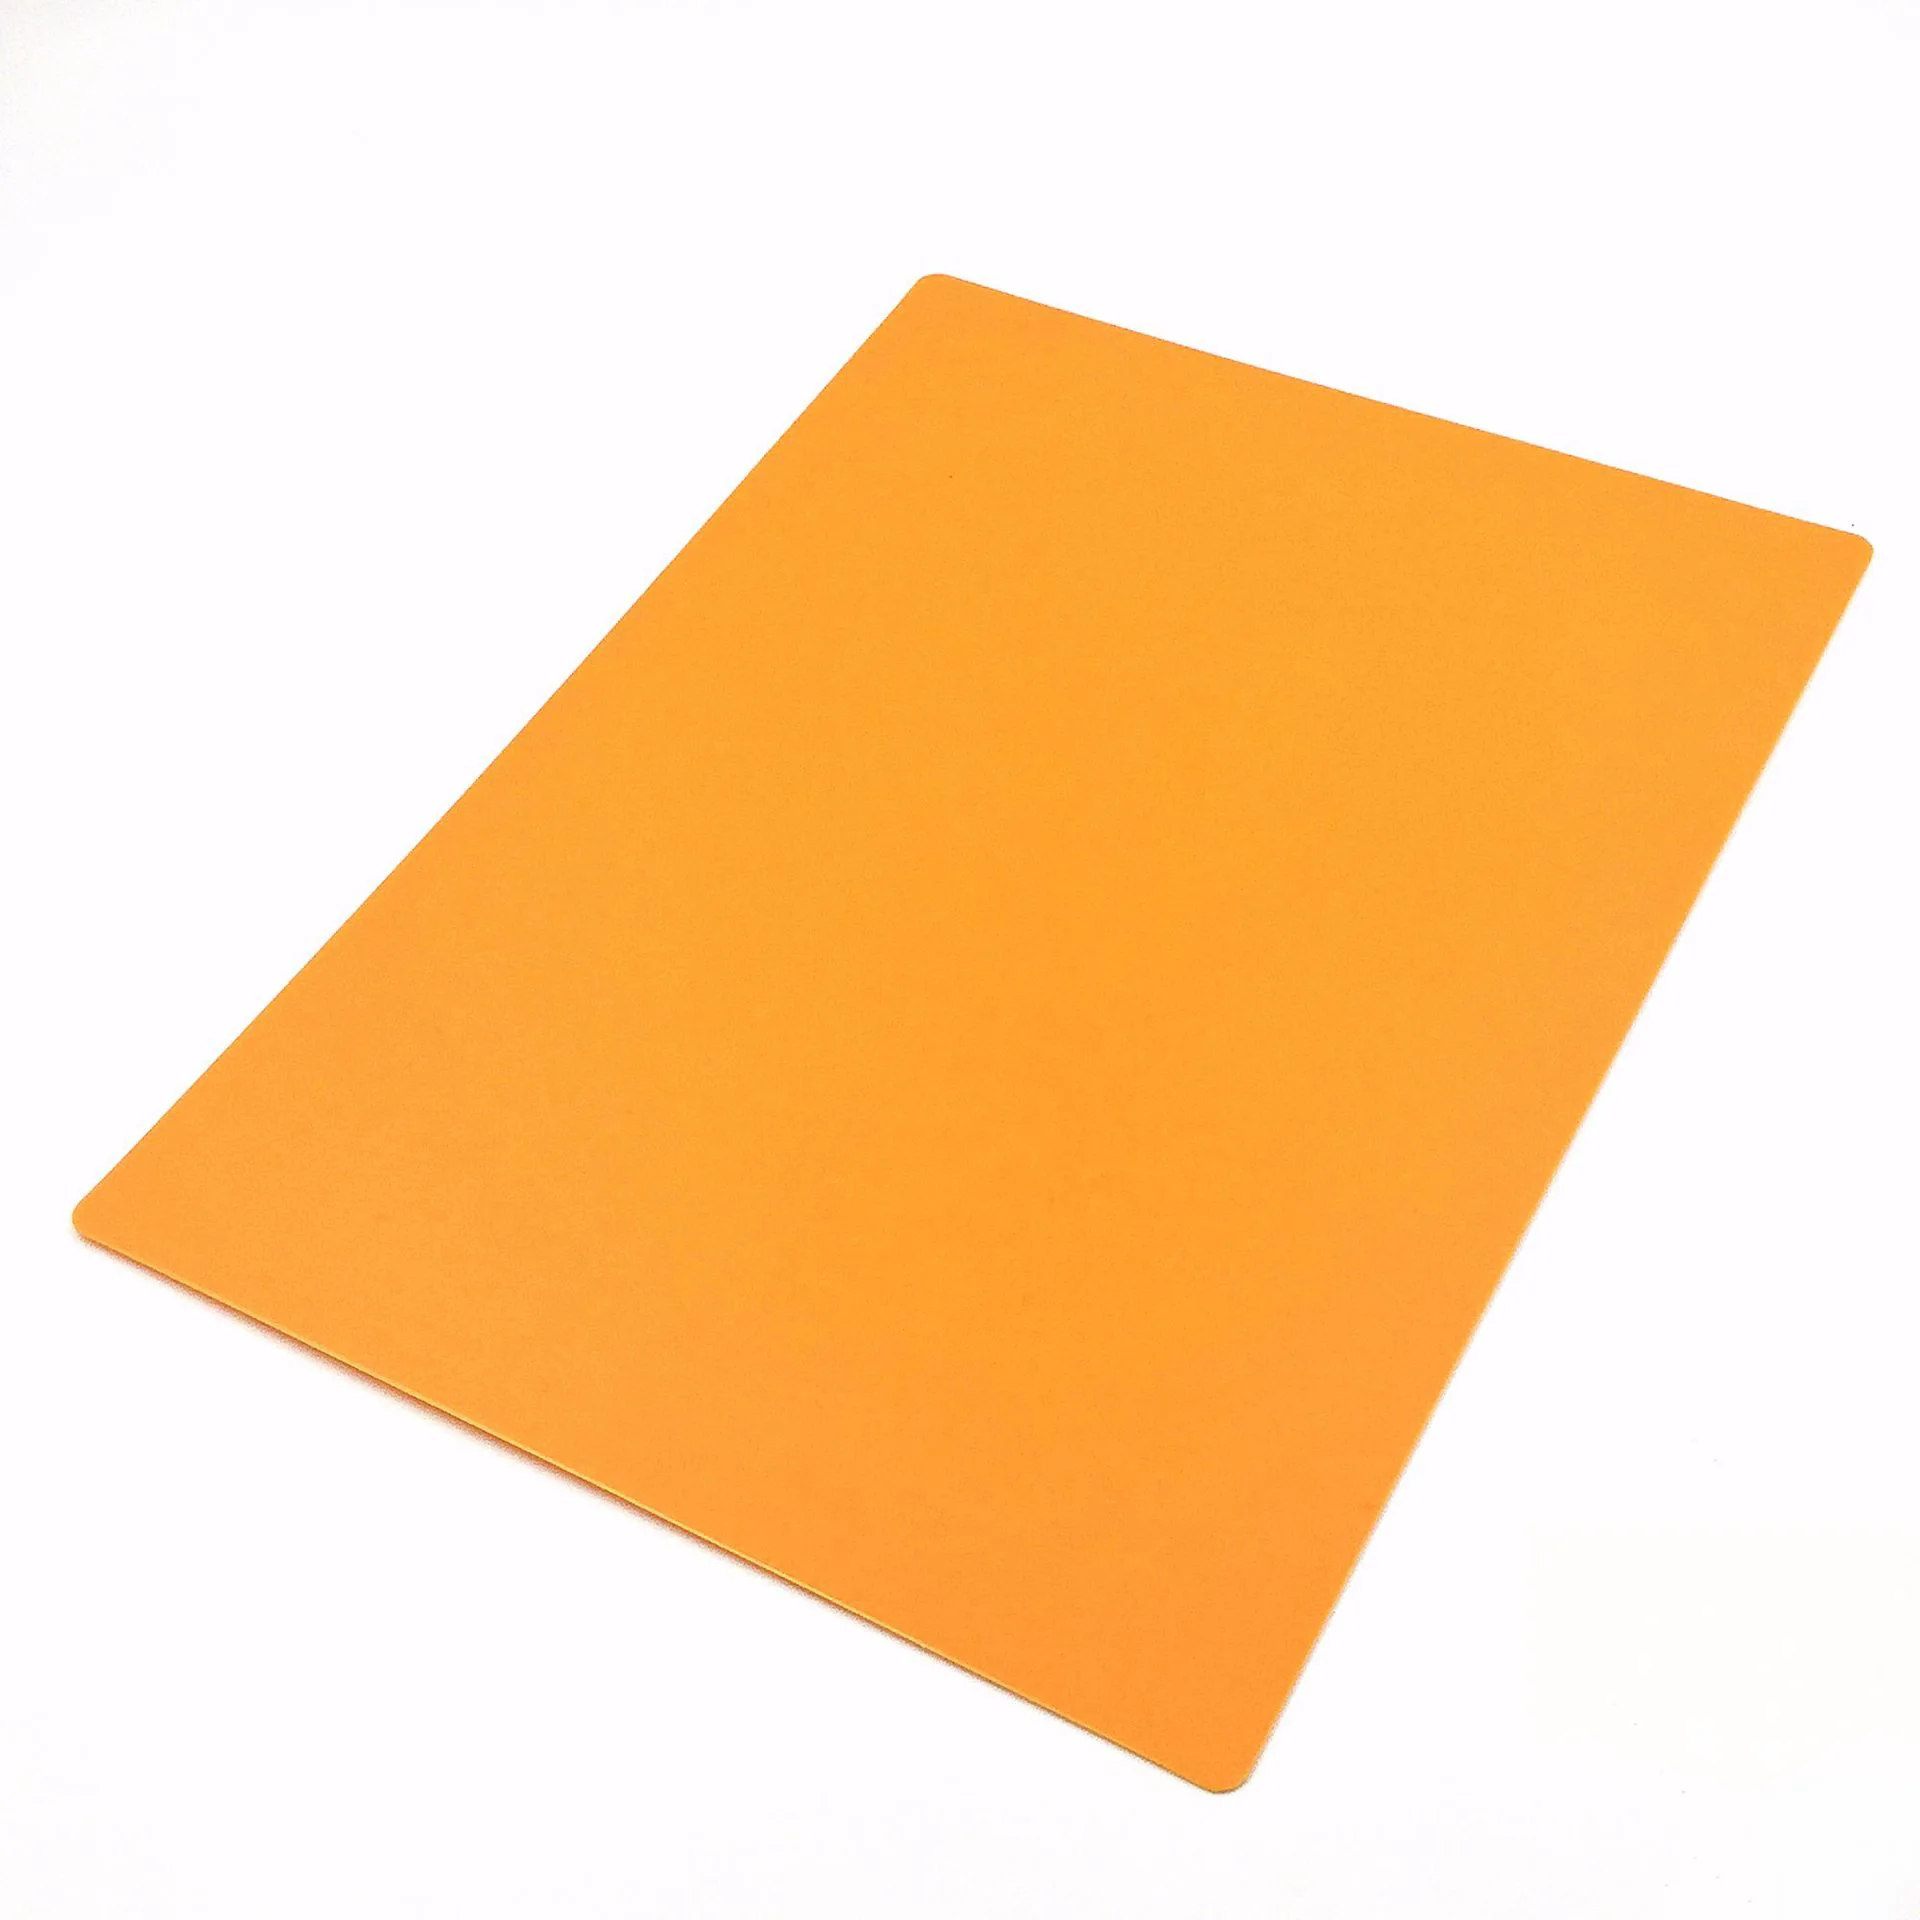 A0 Self Healing Large Pvc Silicone Rubber Scrapbook Flexible Plastic Cutting Mat Buy Scrapbook